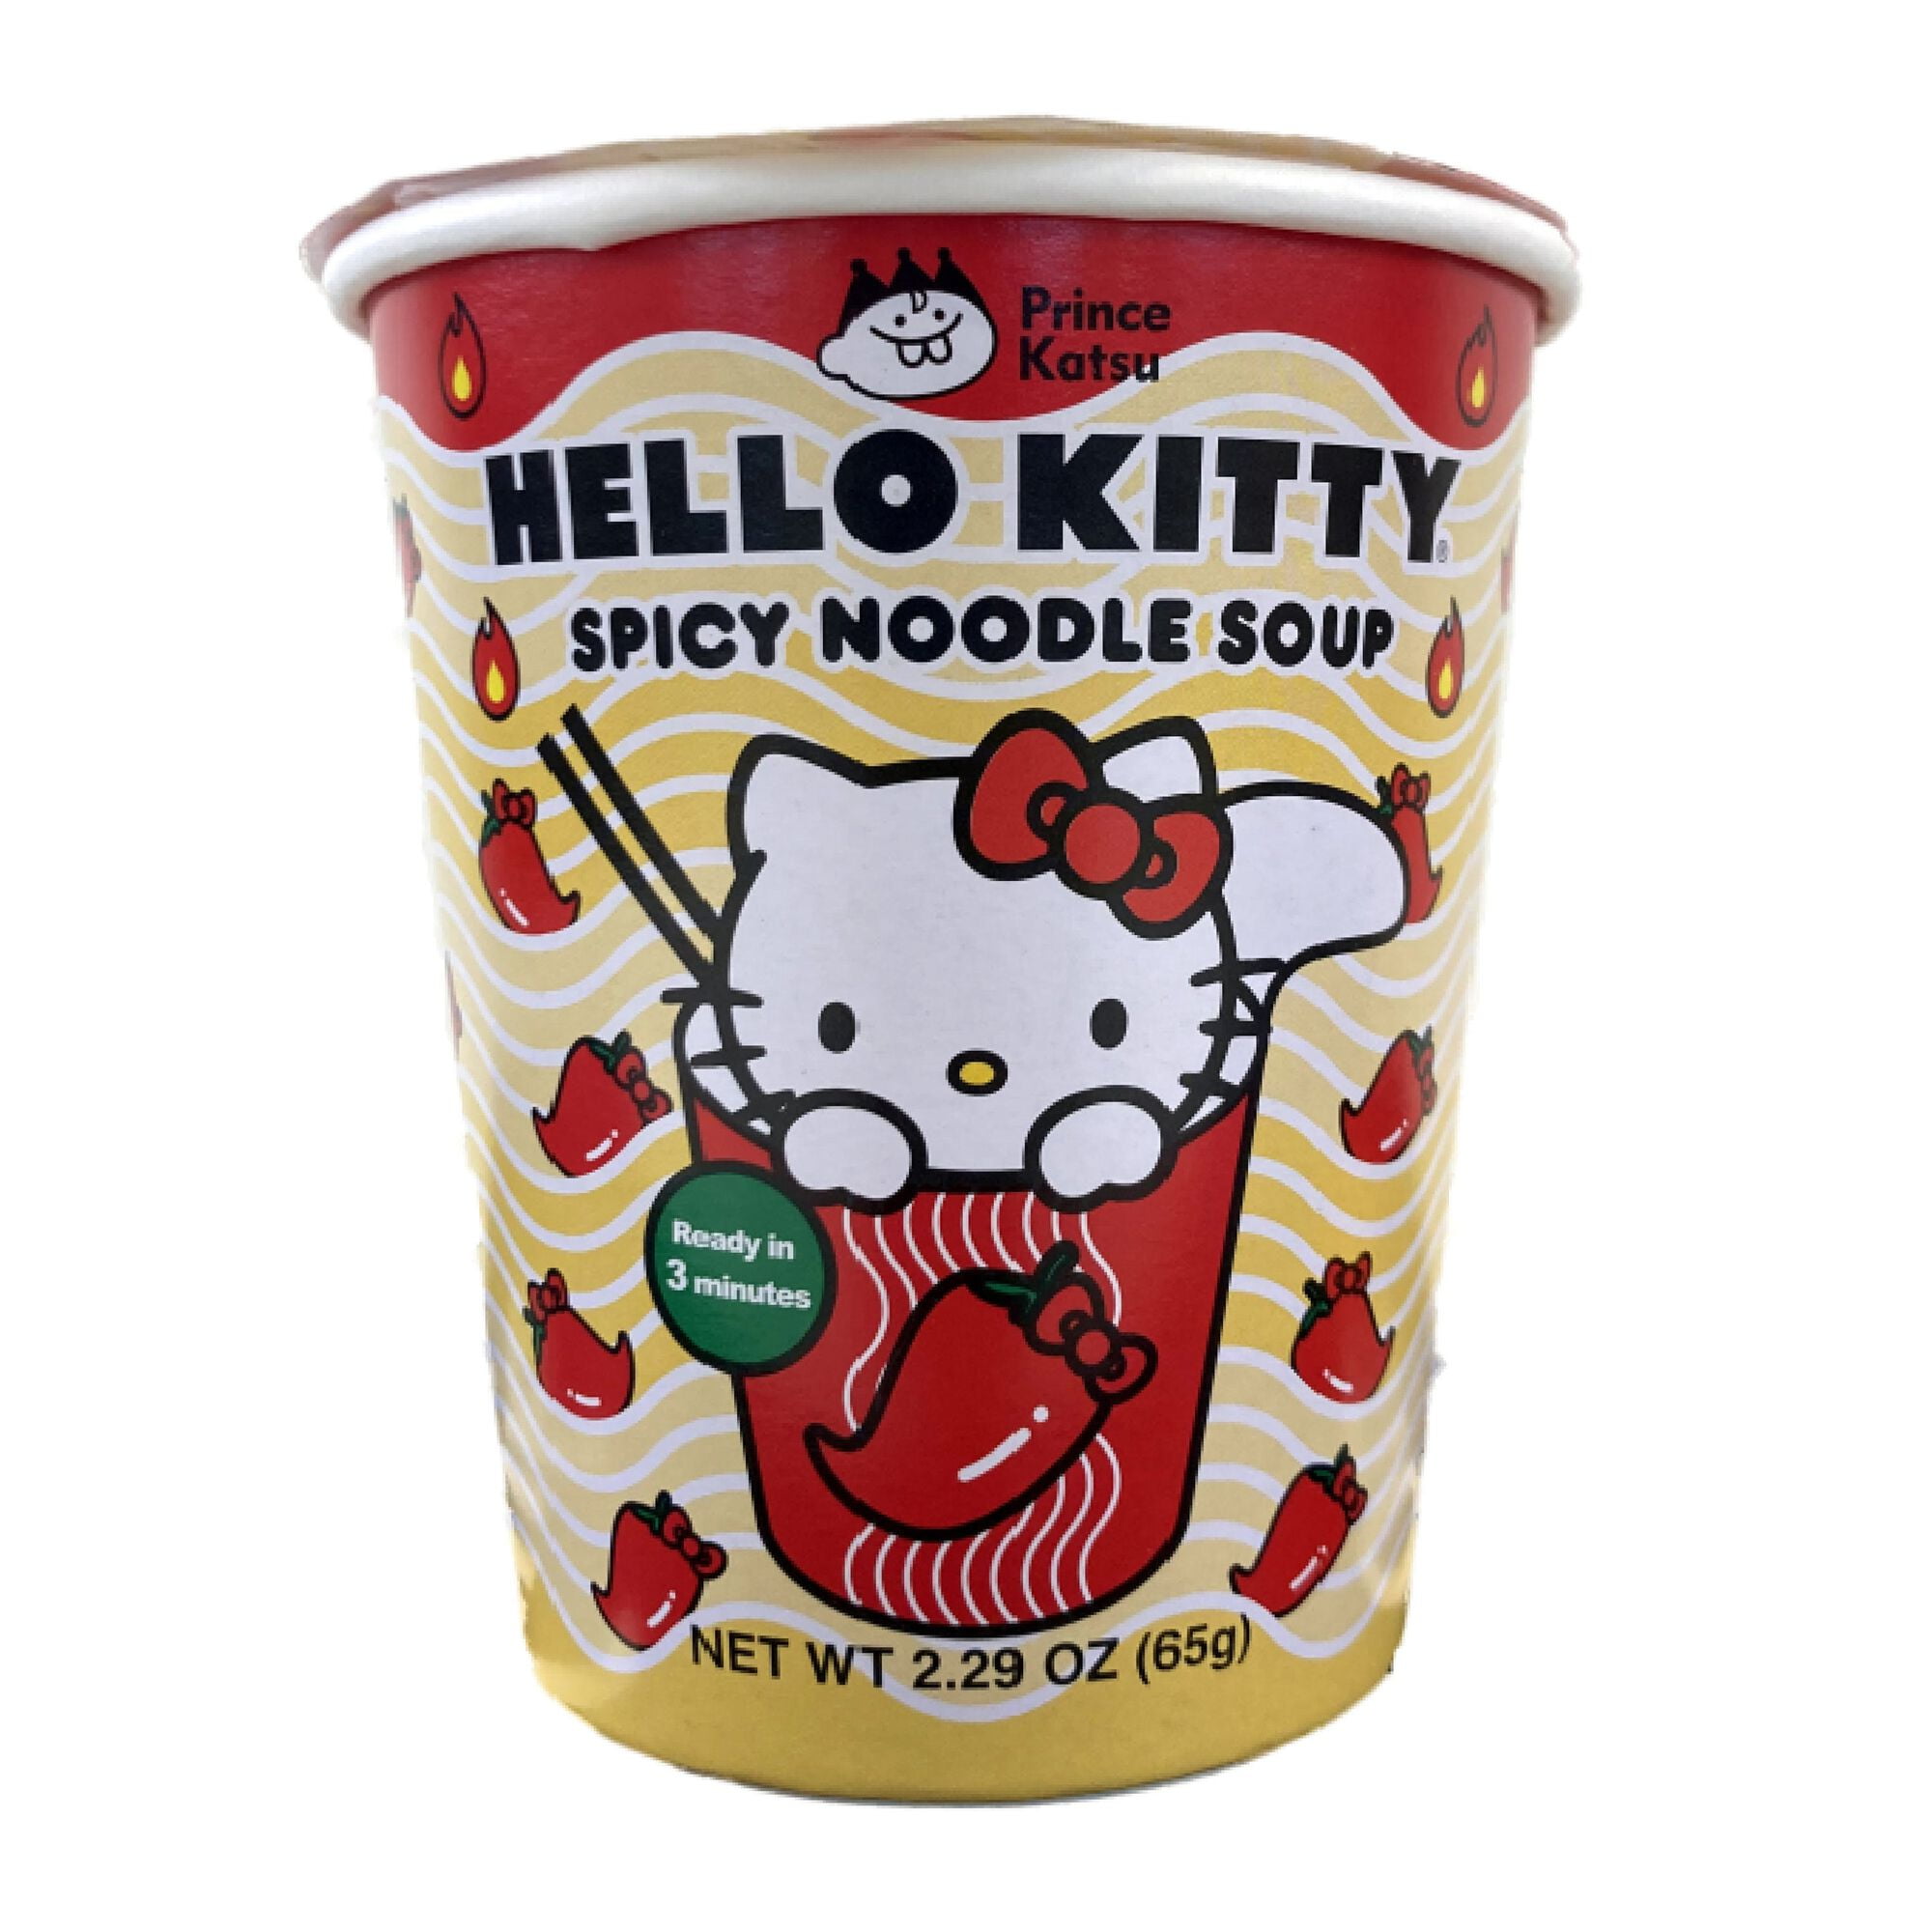 Hello Kitty Cup Noodle Bundle